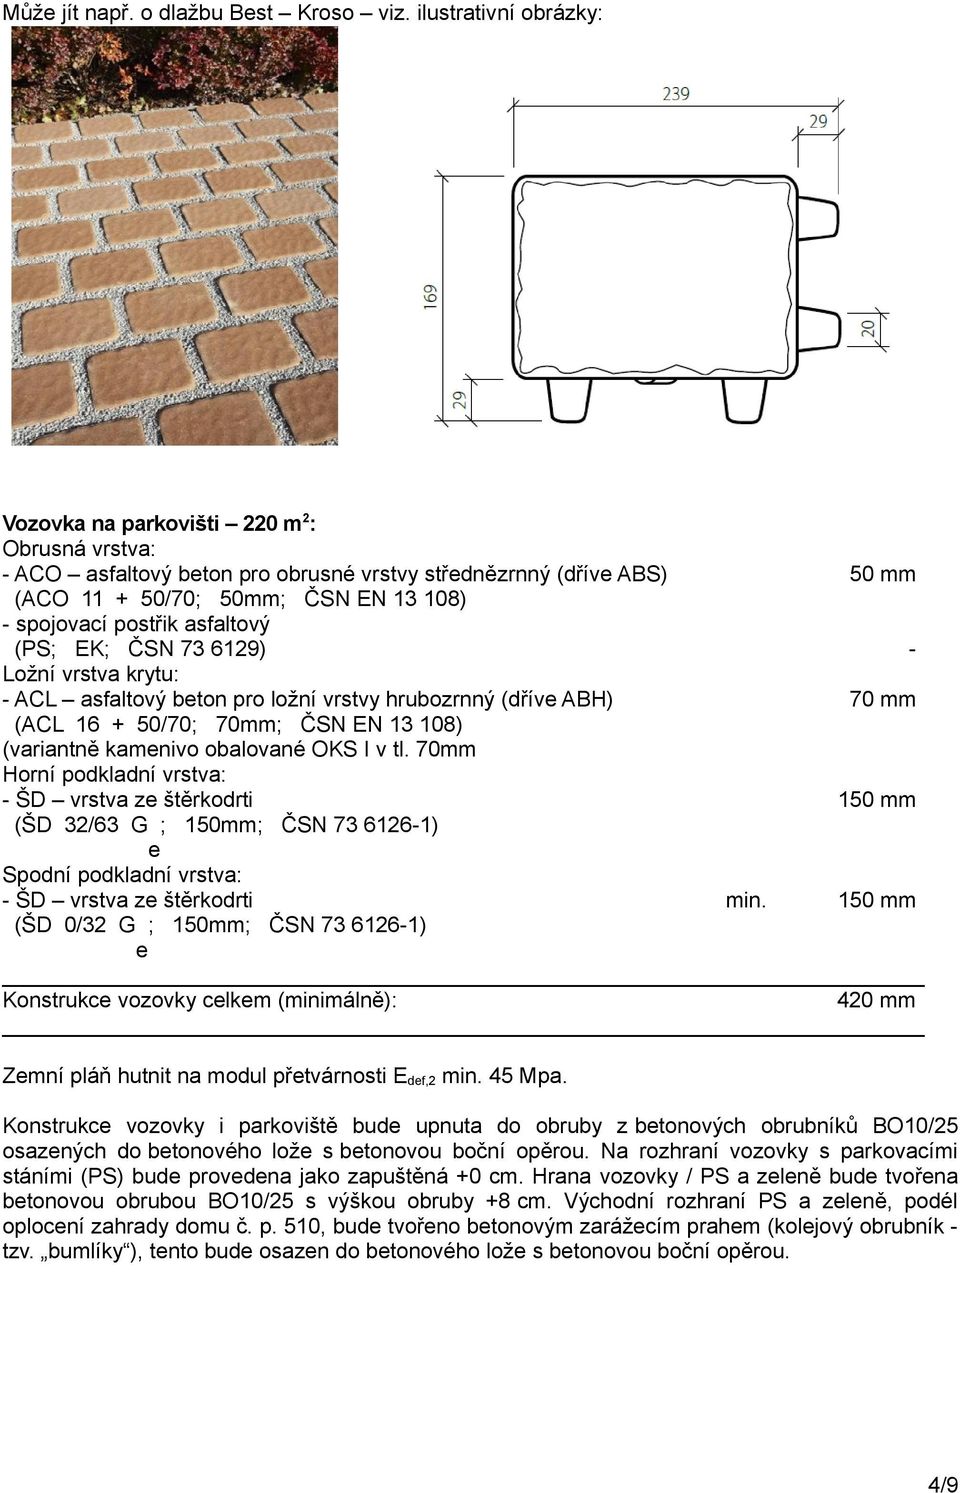 asfaltový (PS; EK; ČSN 73 6129) - Ložní vrstva krytu: - ACL asfaltový beton pro ložní vrstvy hrubozrnný (dříve ABH) 70 mm (ACL 16 + 50/70; 70mm; ČSN EN 13 108) (variantně kamenivo obalované OKS I v